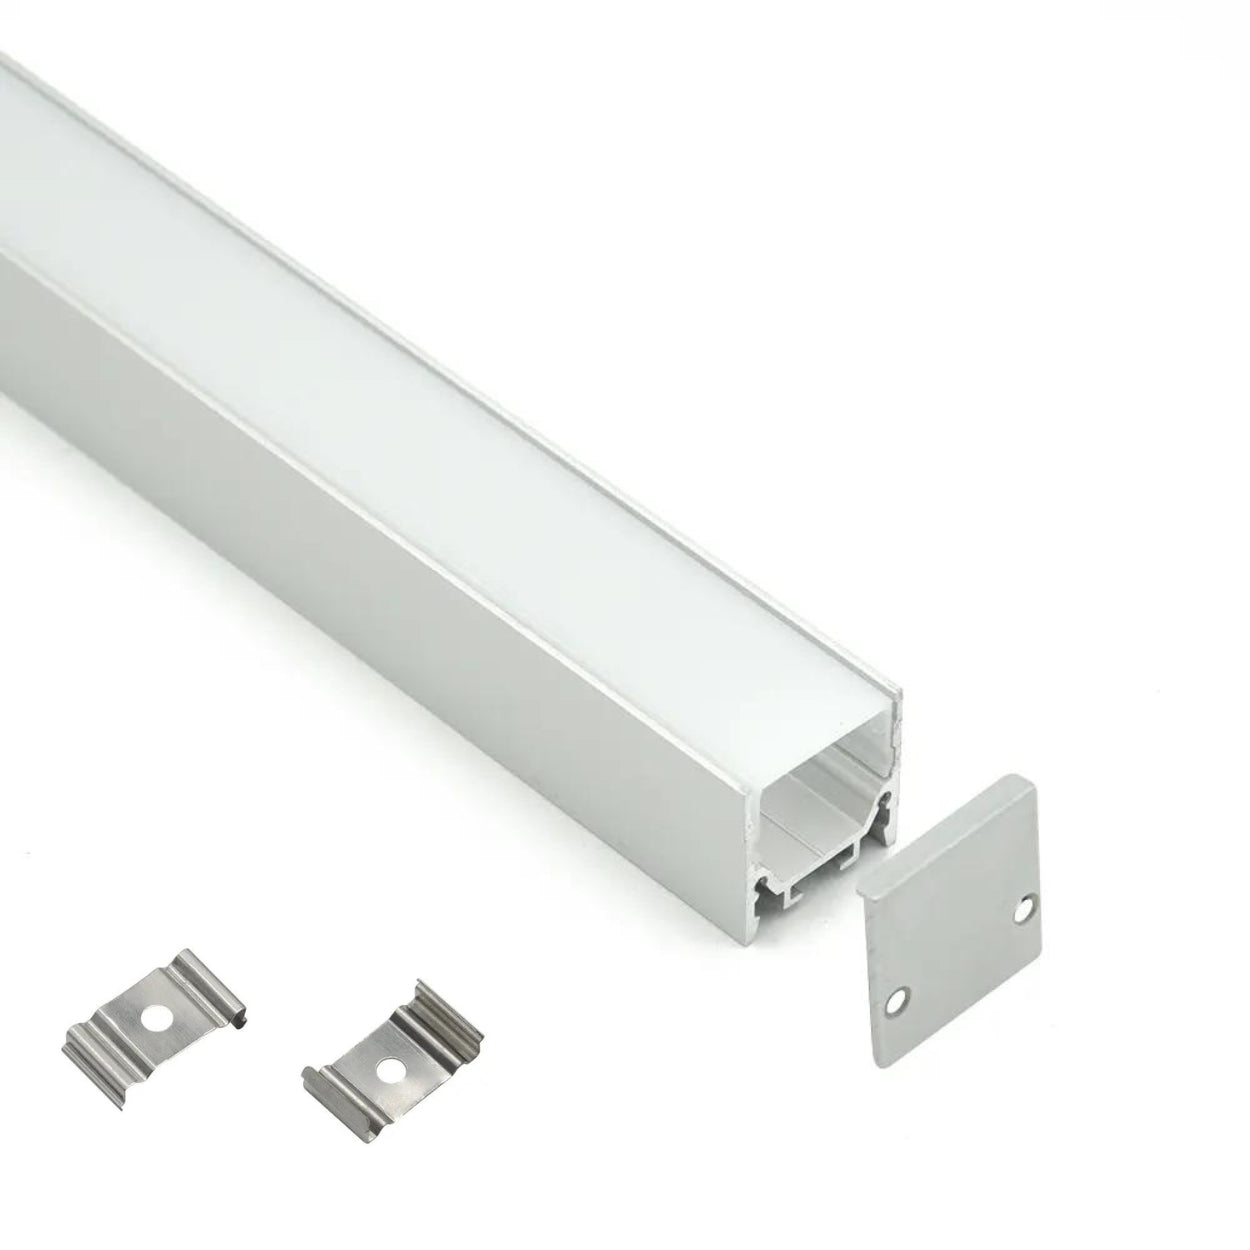 LED Aluminium Profile Linea 1 2M Kit